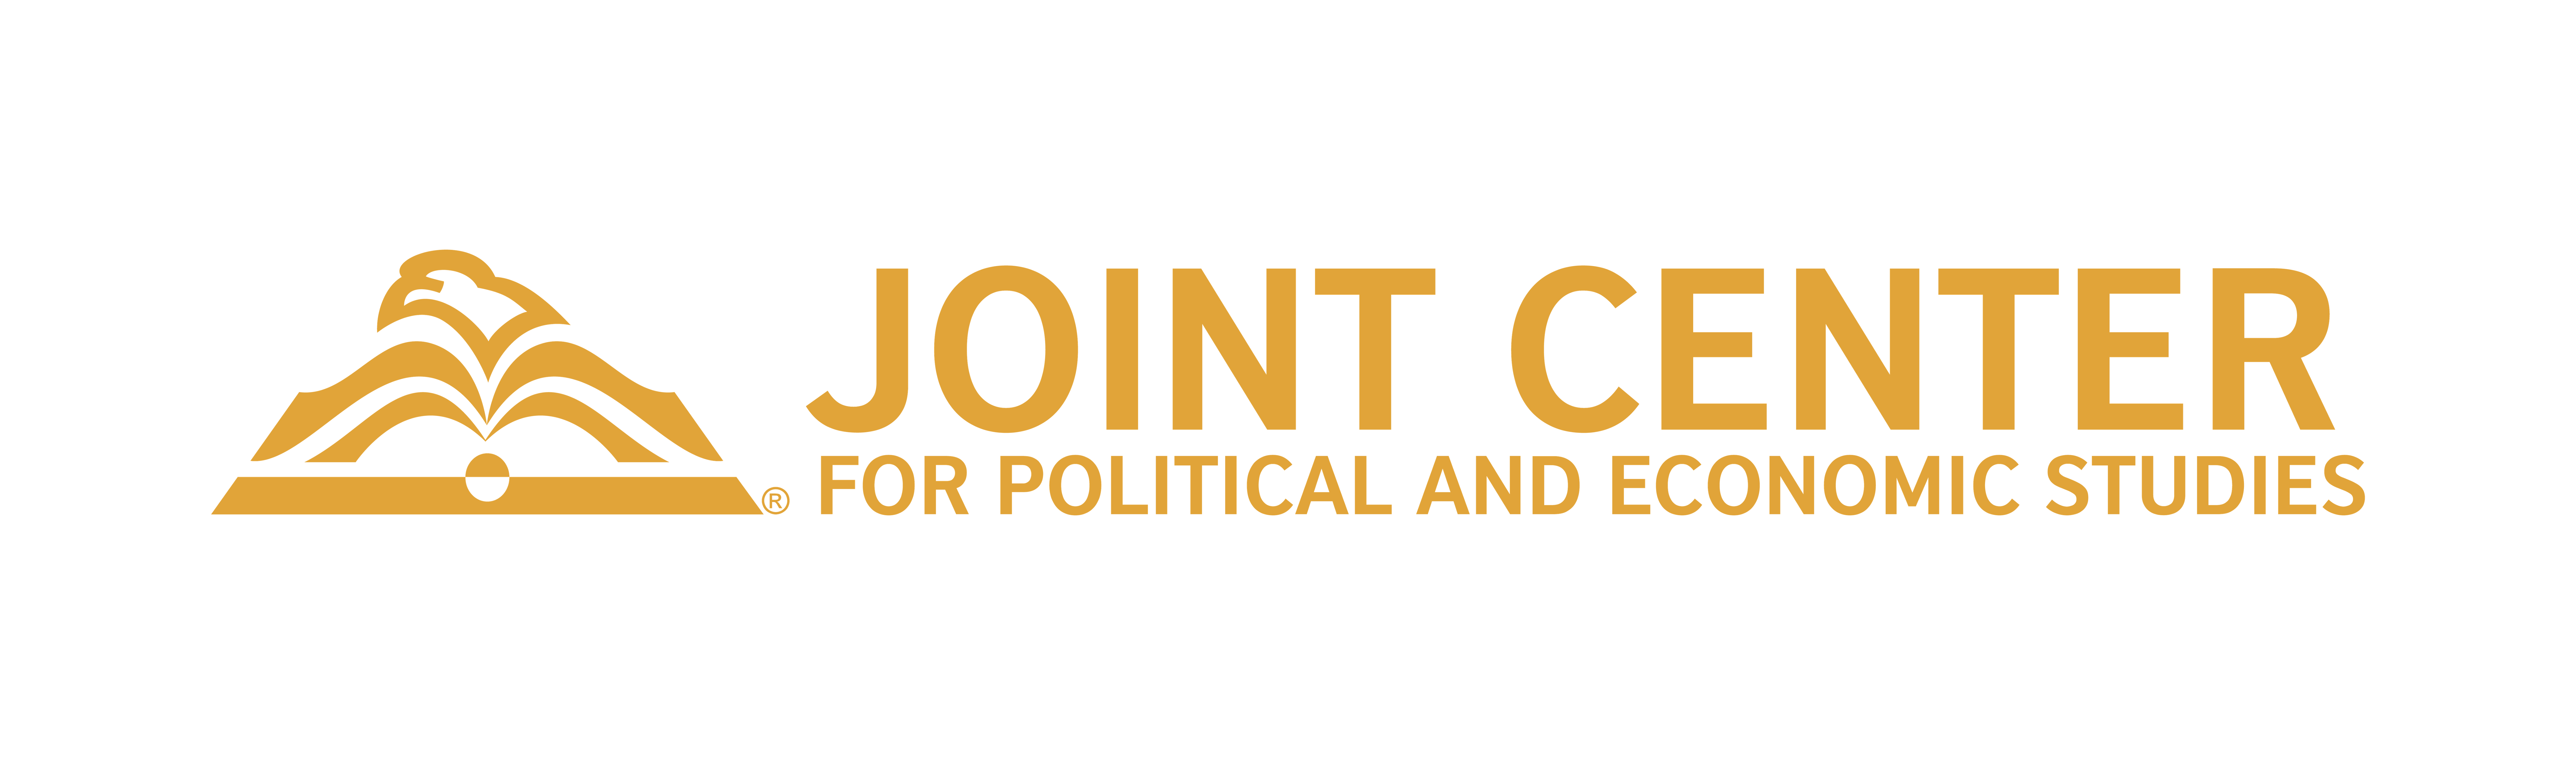 joint-center-long-logo (PNG) - gold